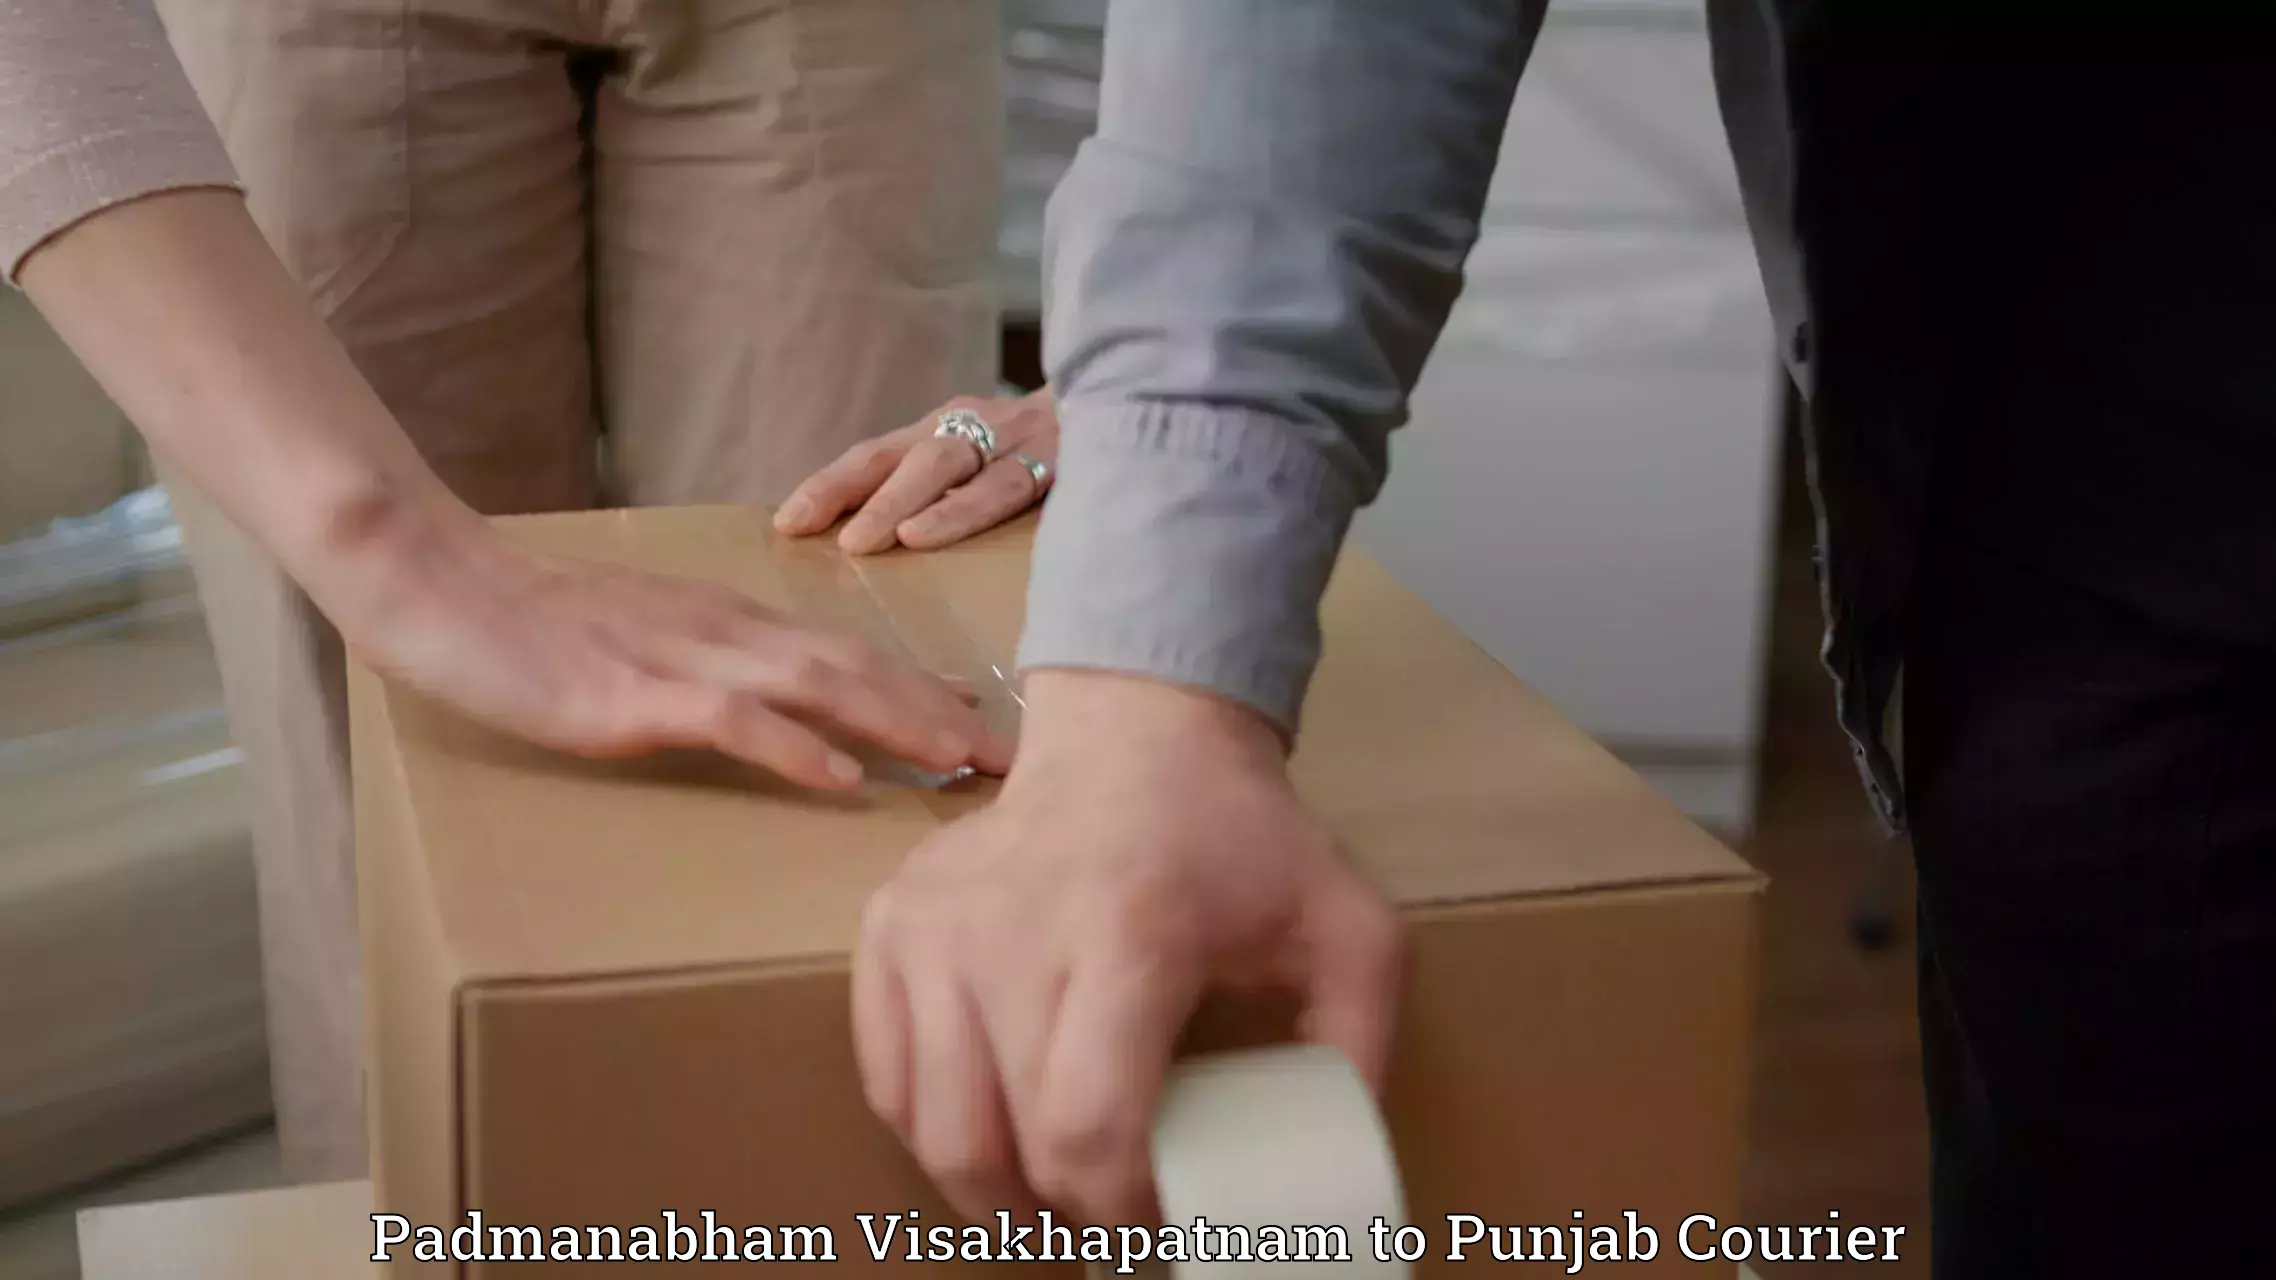 Professional courier handling Padmanabham Visakhapatnam to Talwara